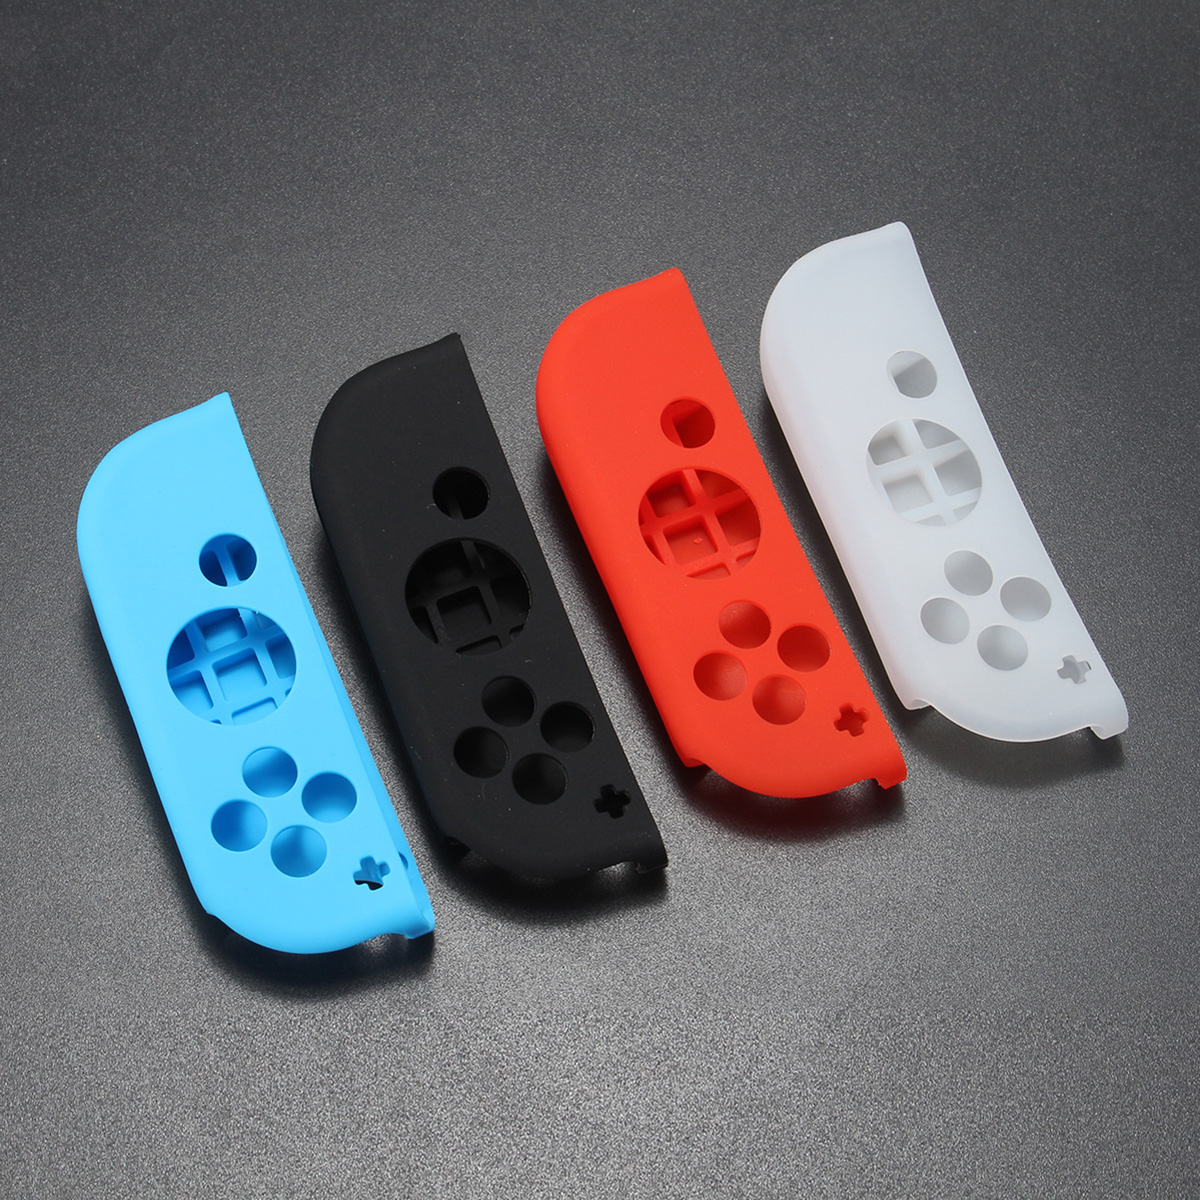 Silicon Case Protective Impact Resistant Rubber Skin Cover For Nintendo Switch Joy-Con Controller 74